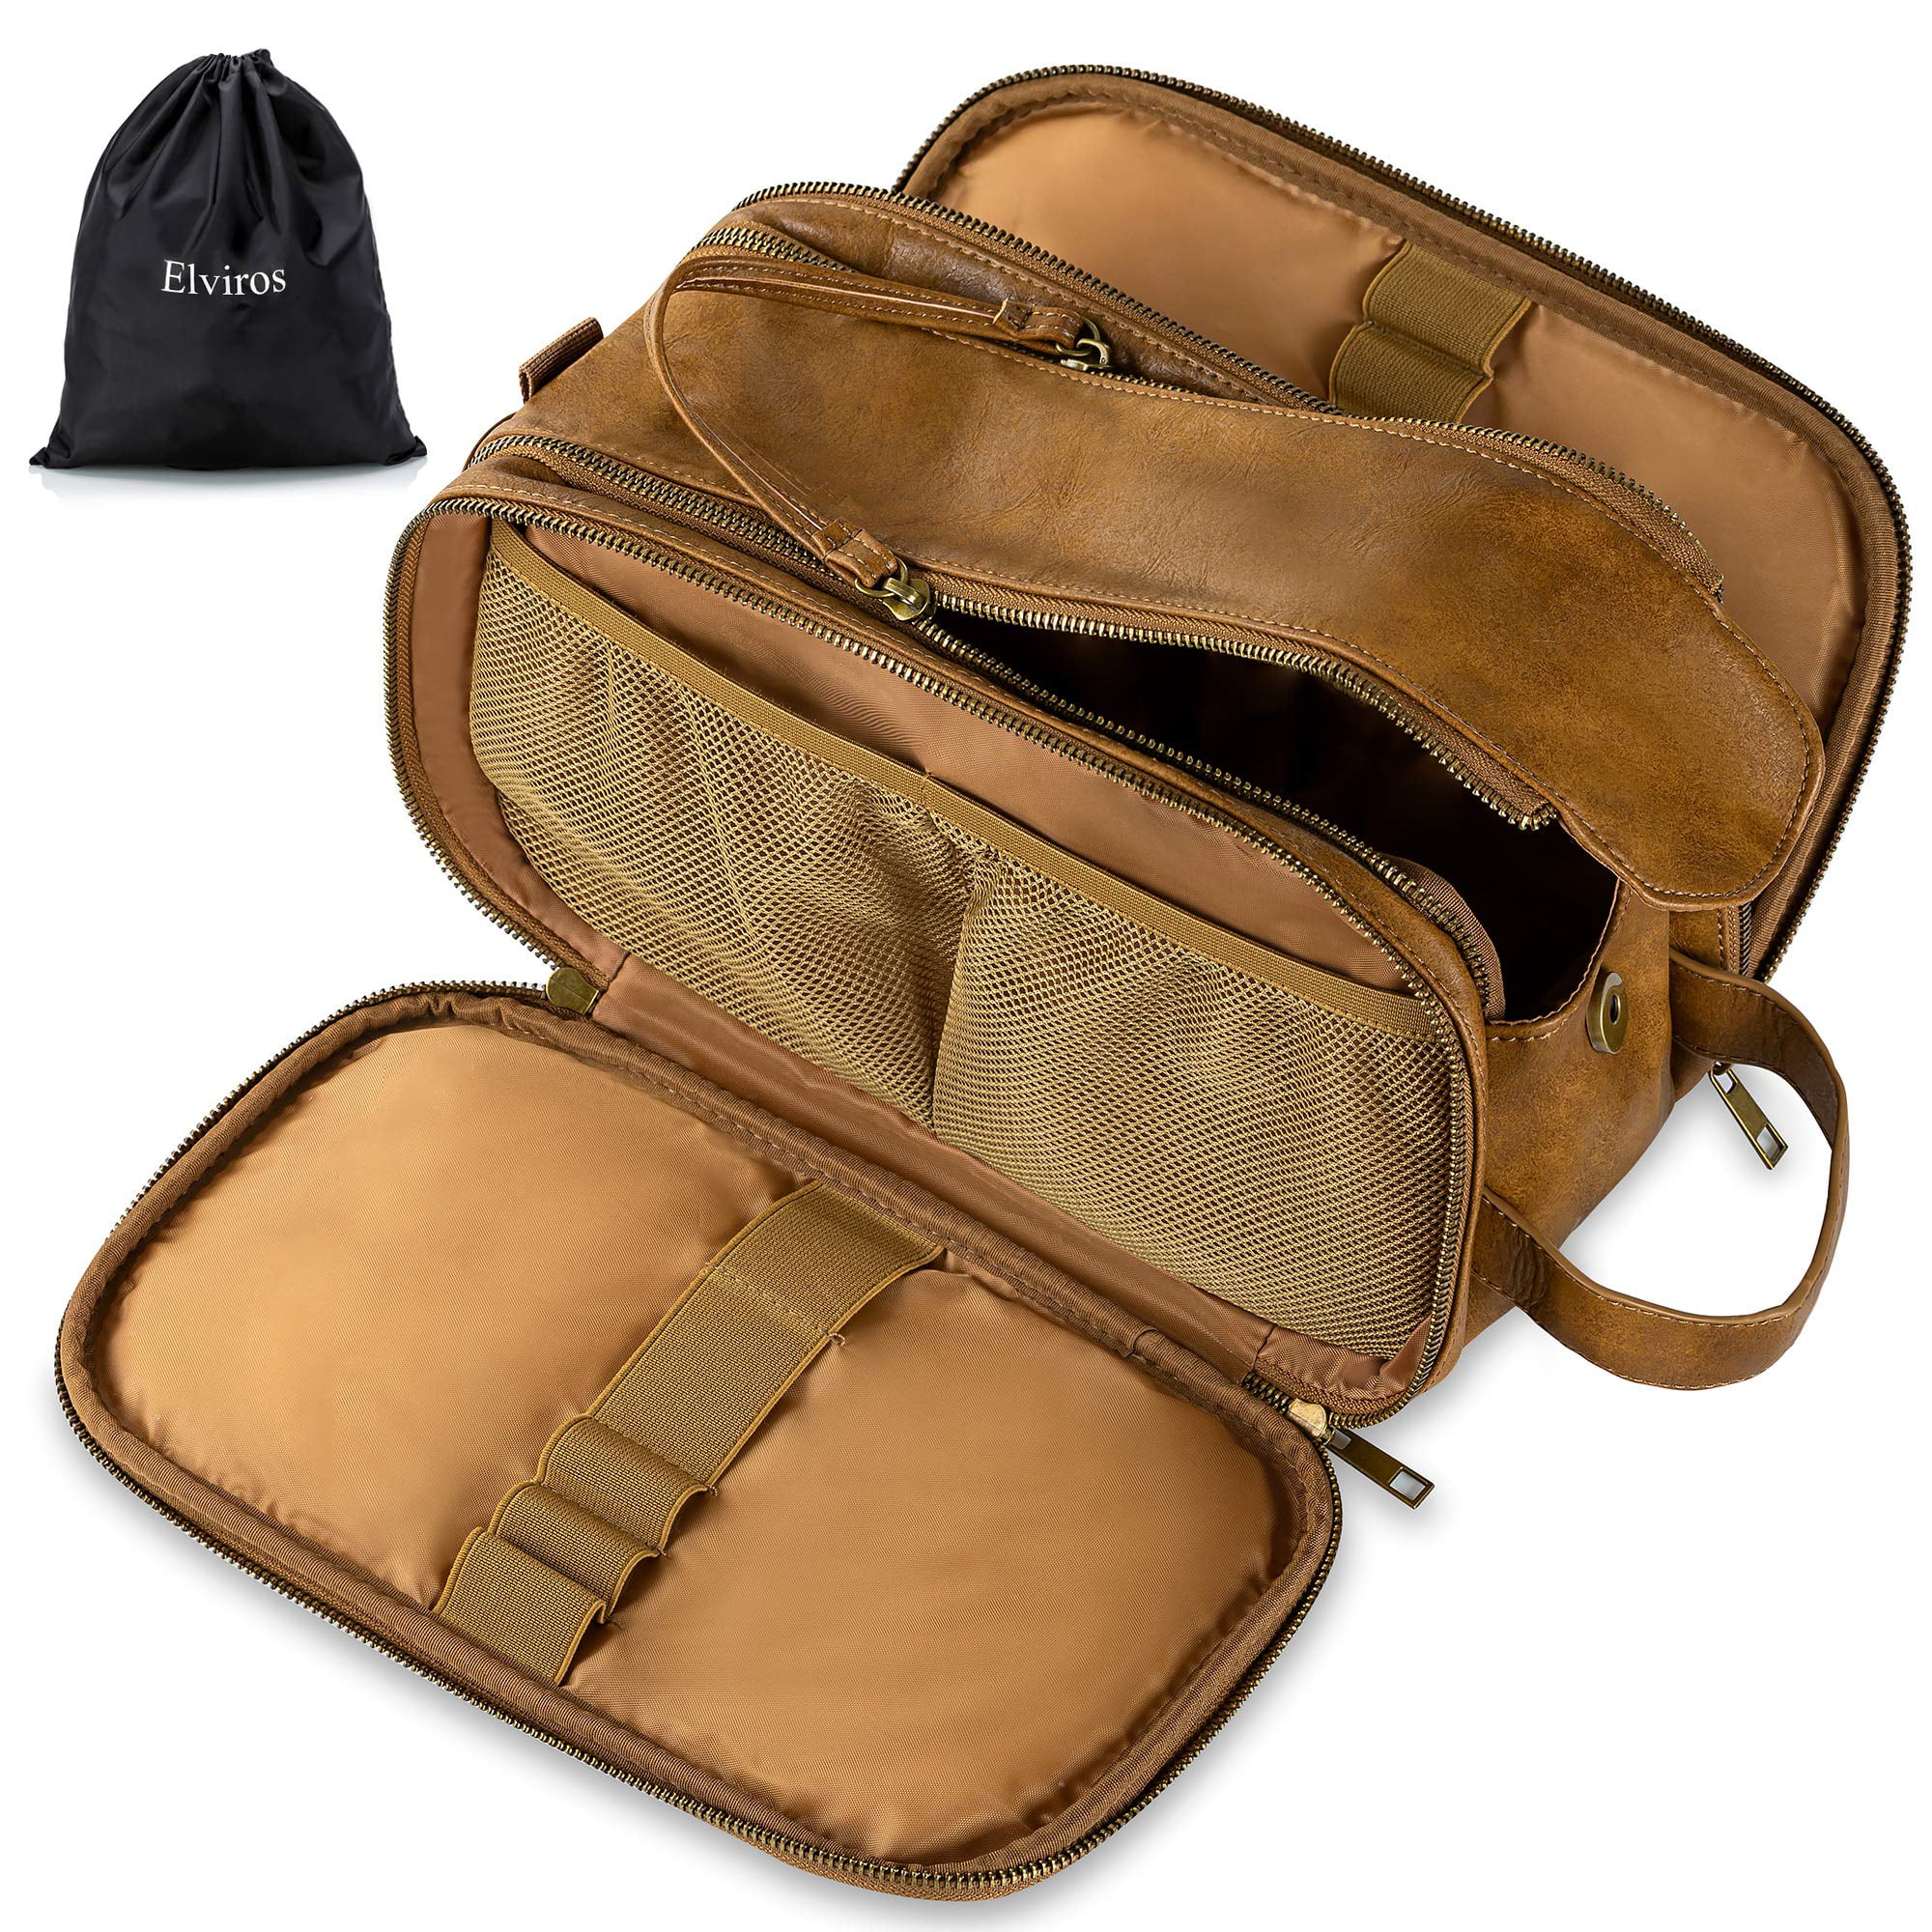 Polare Original Polare Toiletry Bag Full Grain Leather Shaving Kit Dopp Kit Travel Case Wash Bag with YKK Zippers